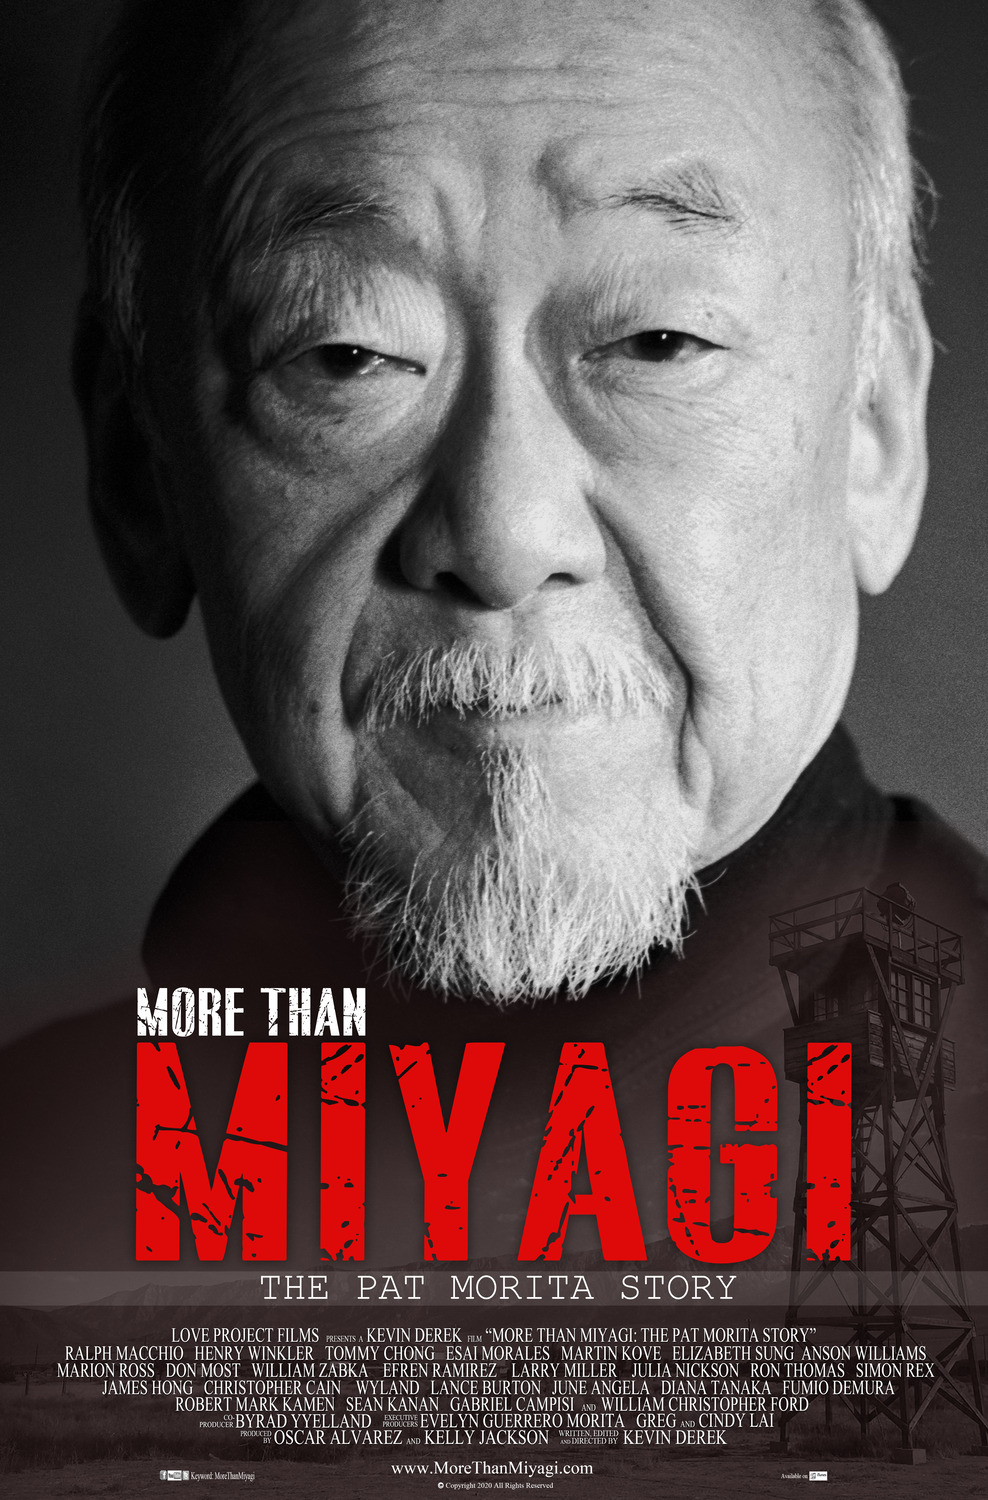 Extra Large Movie Poster Image for More Than Miyagi: The Pat Morita Story 